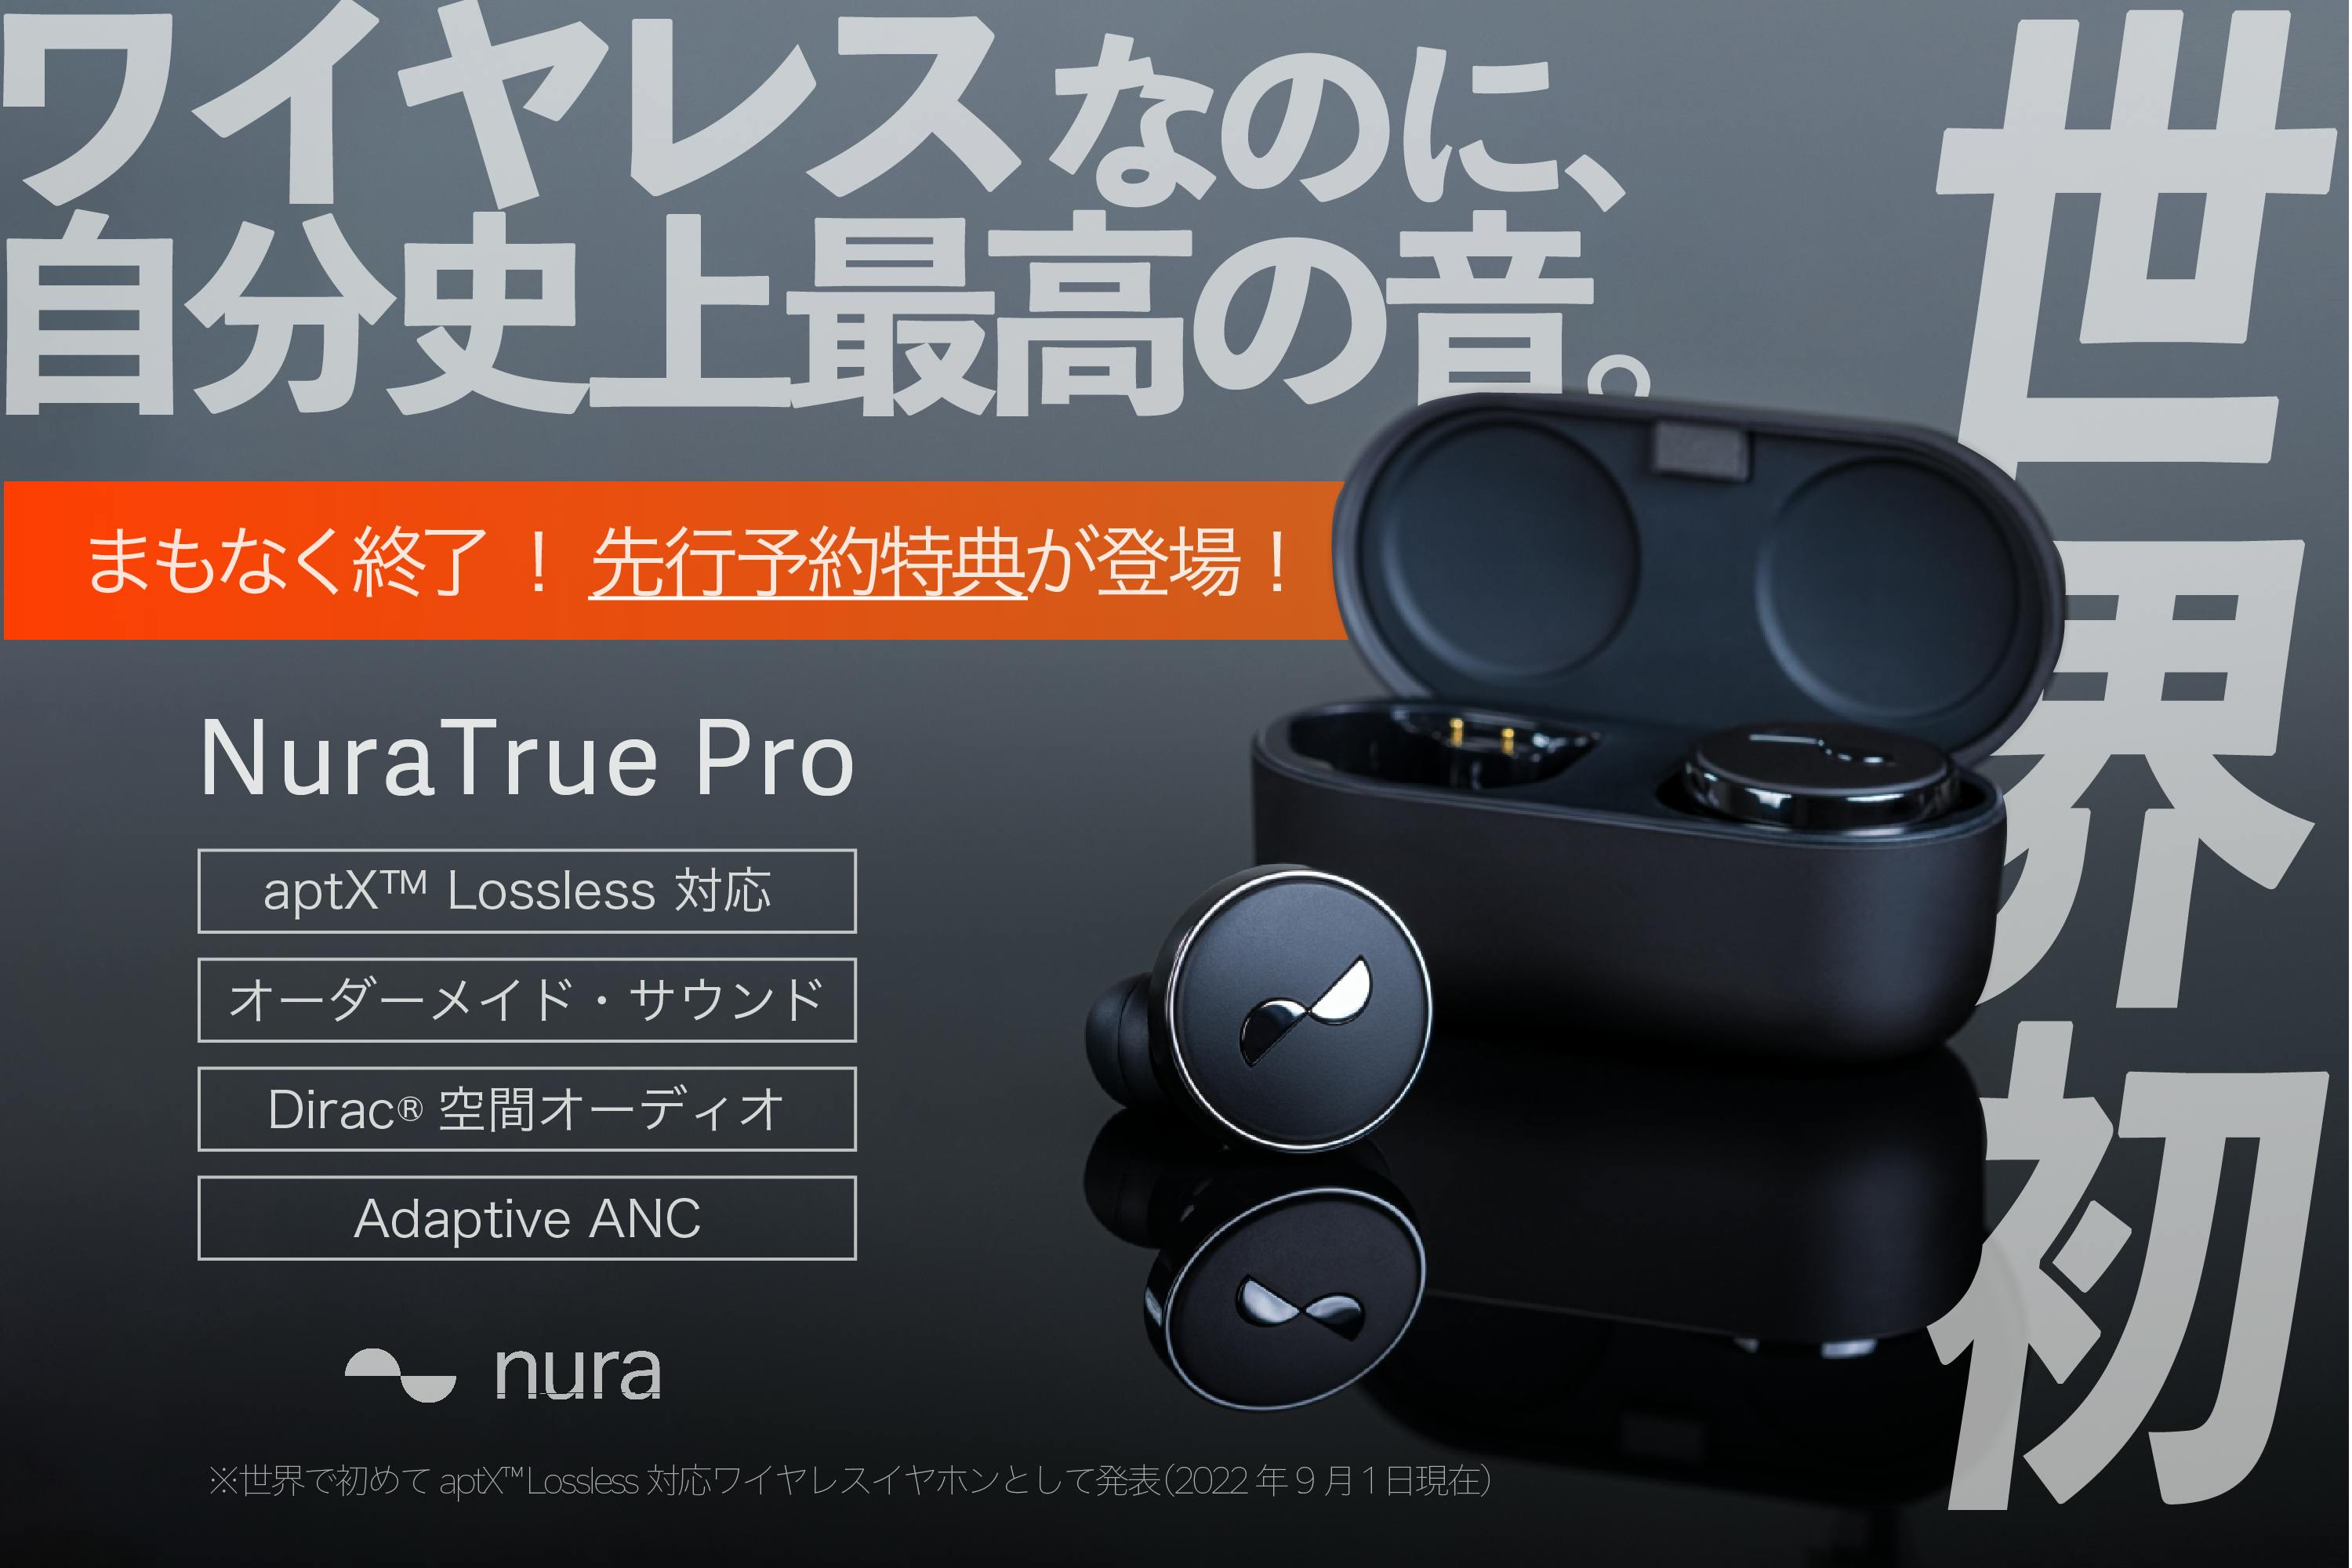 NuraTrue Pro: 世界初ワイヤレス×ロスレス×オーダーメイド音質革命 